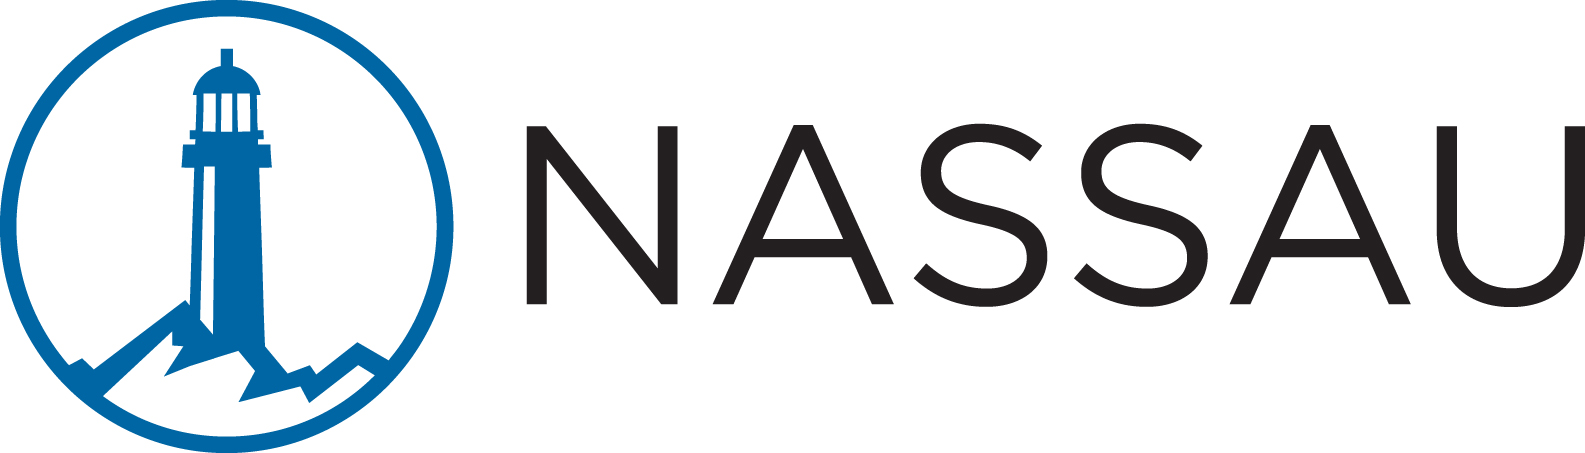 Nassau Financial Group Forms Nassau Global Credit